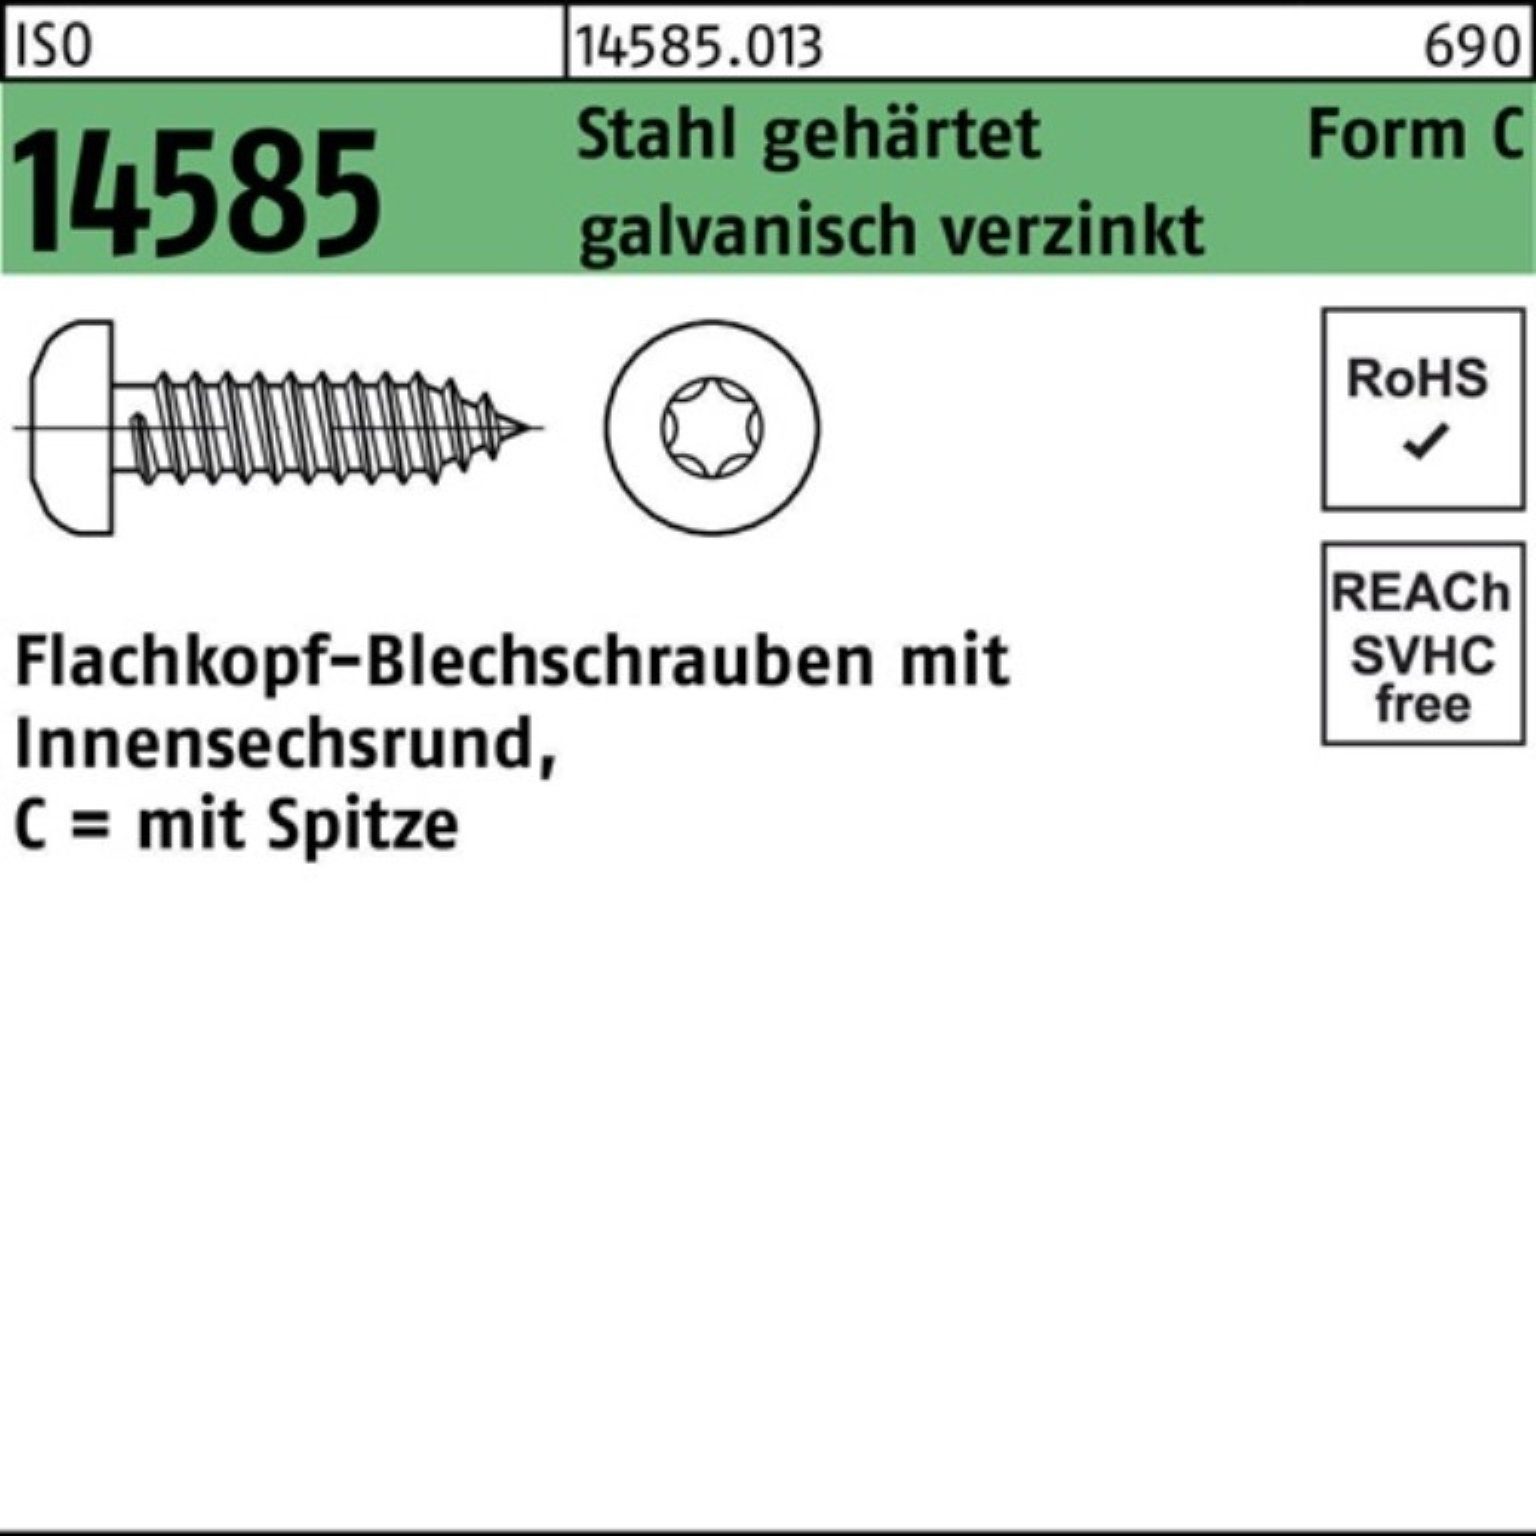 Pack ISR/Spitze ISO Blechschraube 14585 -C-T25 Blechschraube Stahl geh. 4,8x38 Reyher 250er